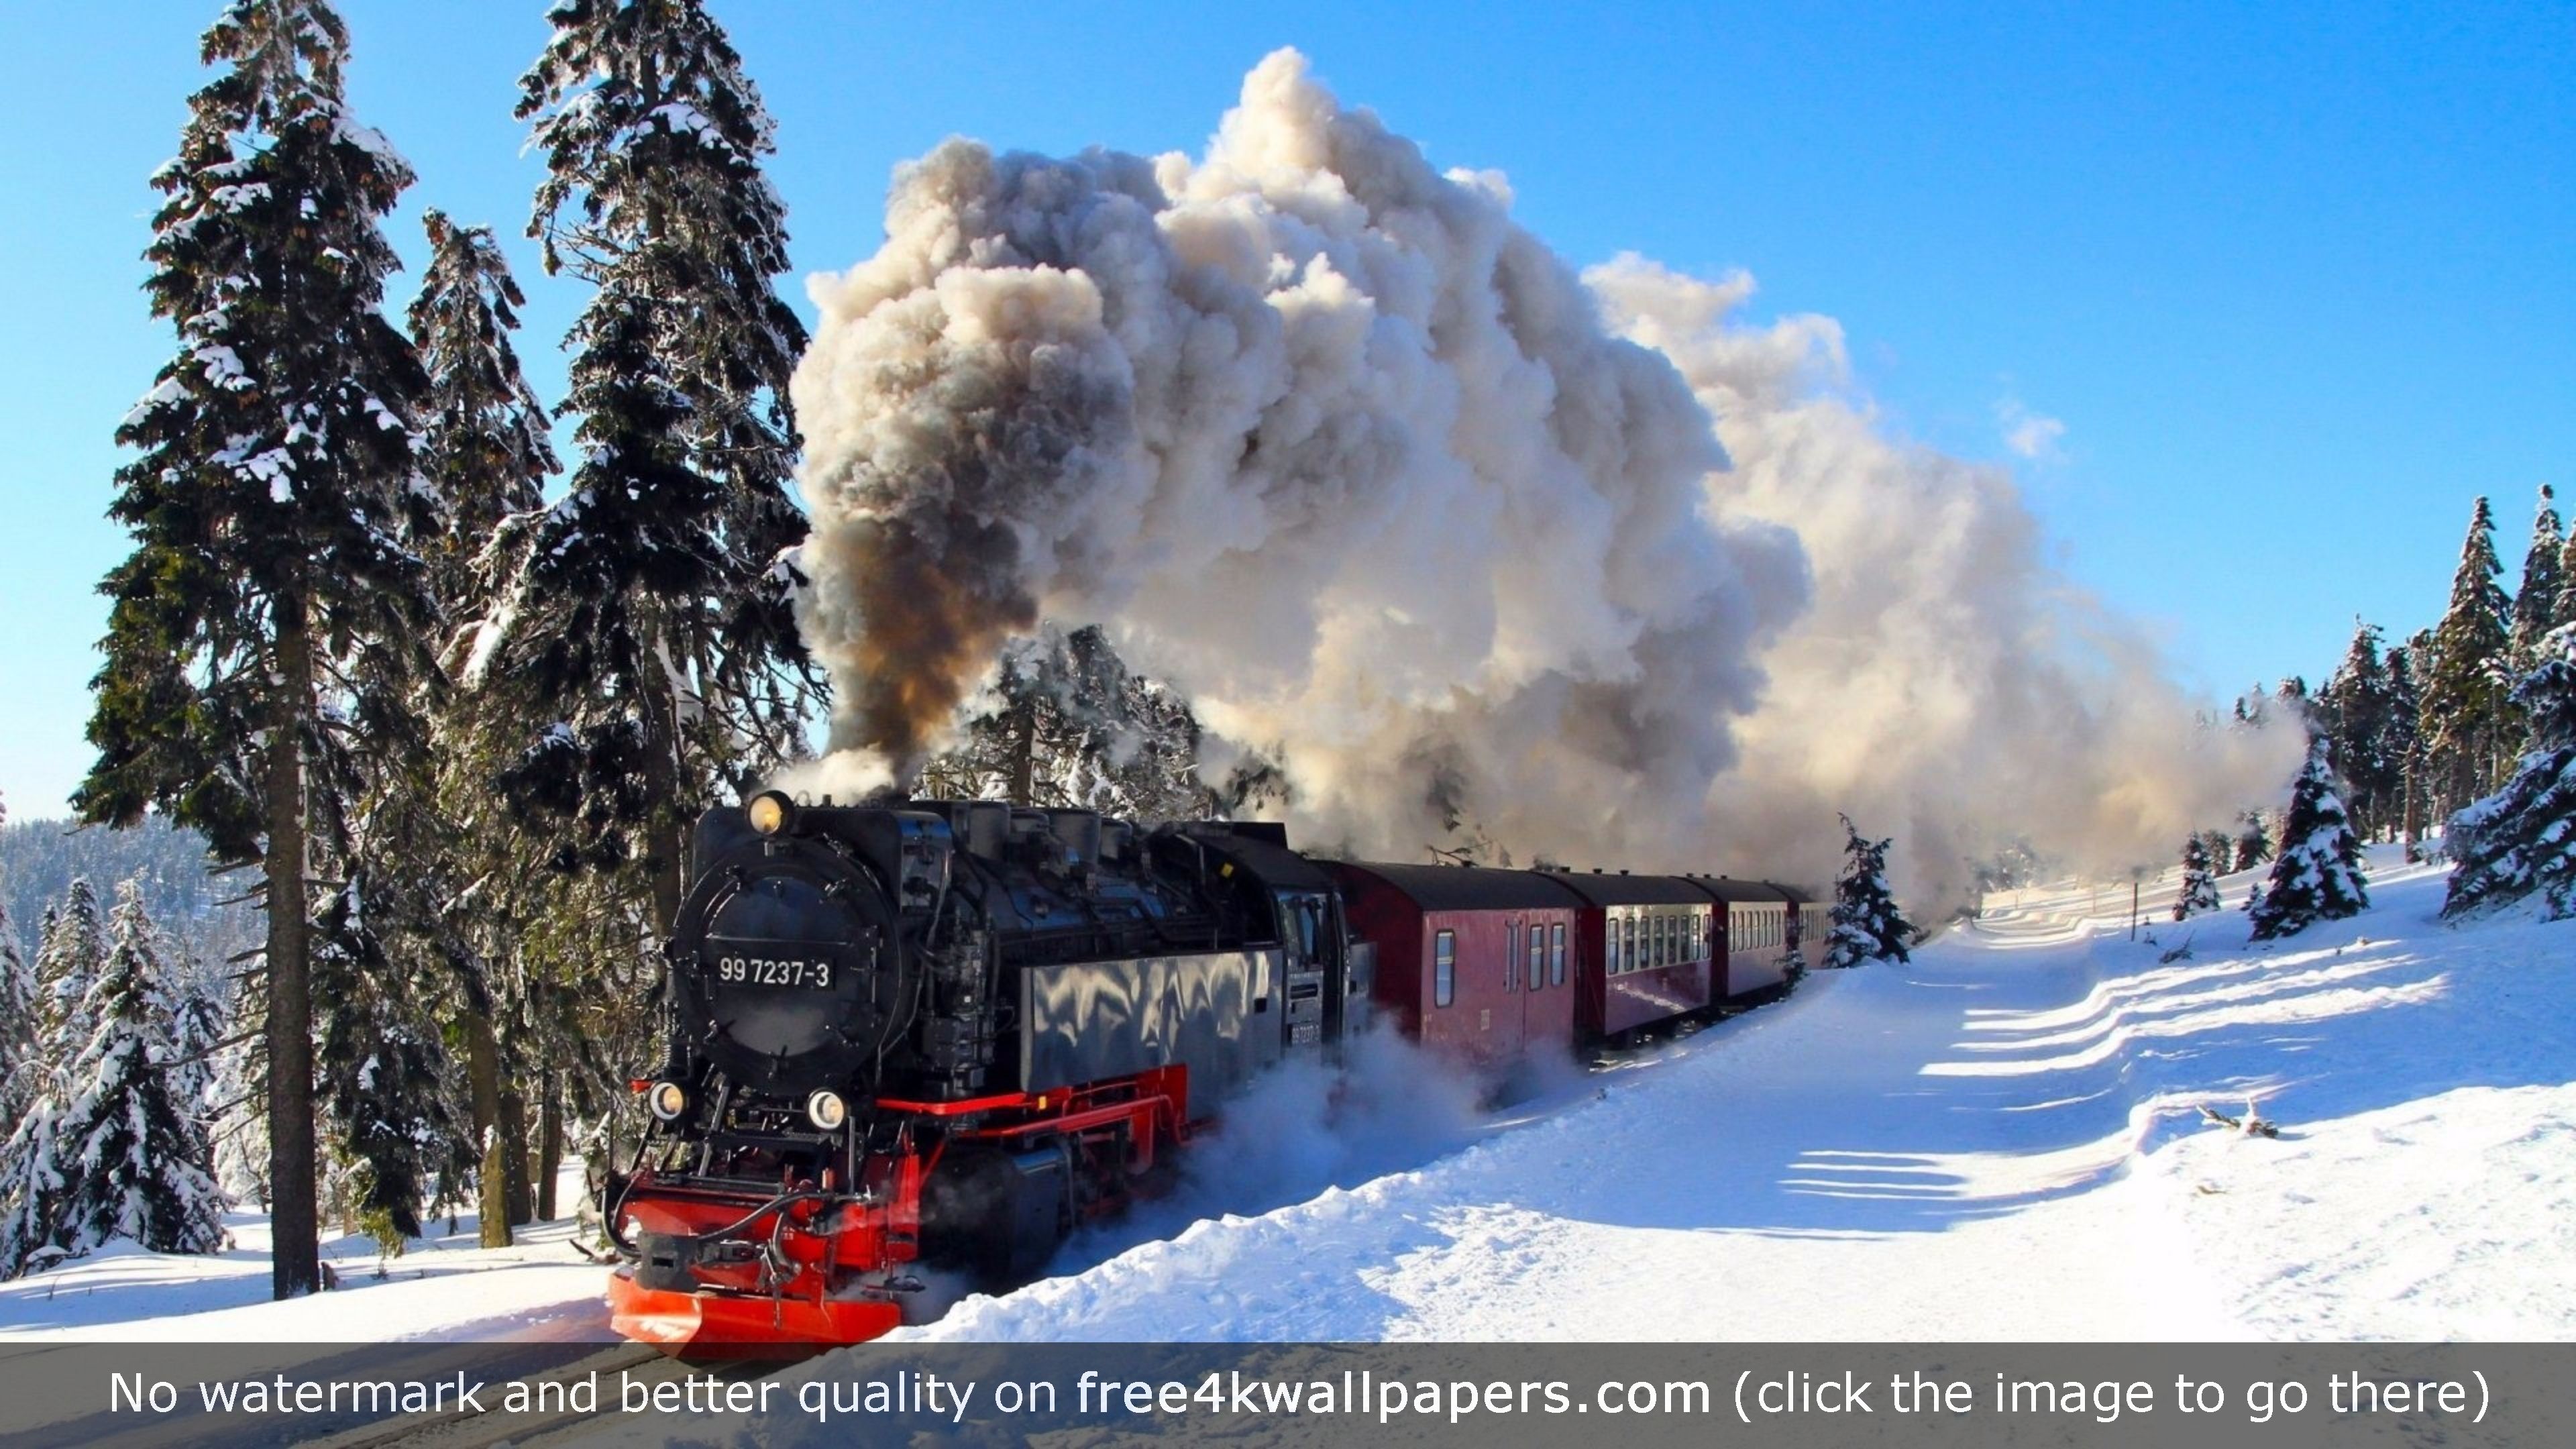 Train in Winter wallpaper https://free4kwallpapers.com/wallpaper ...